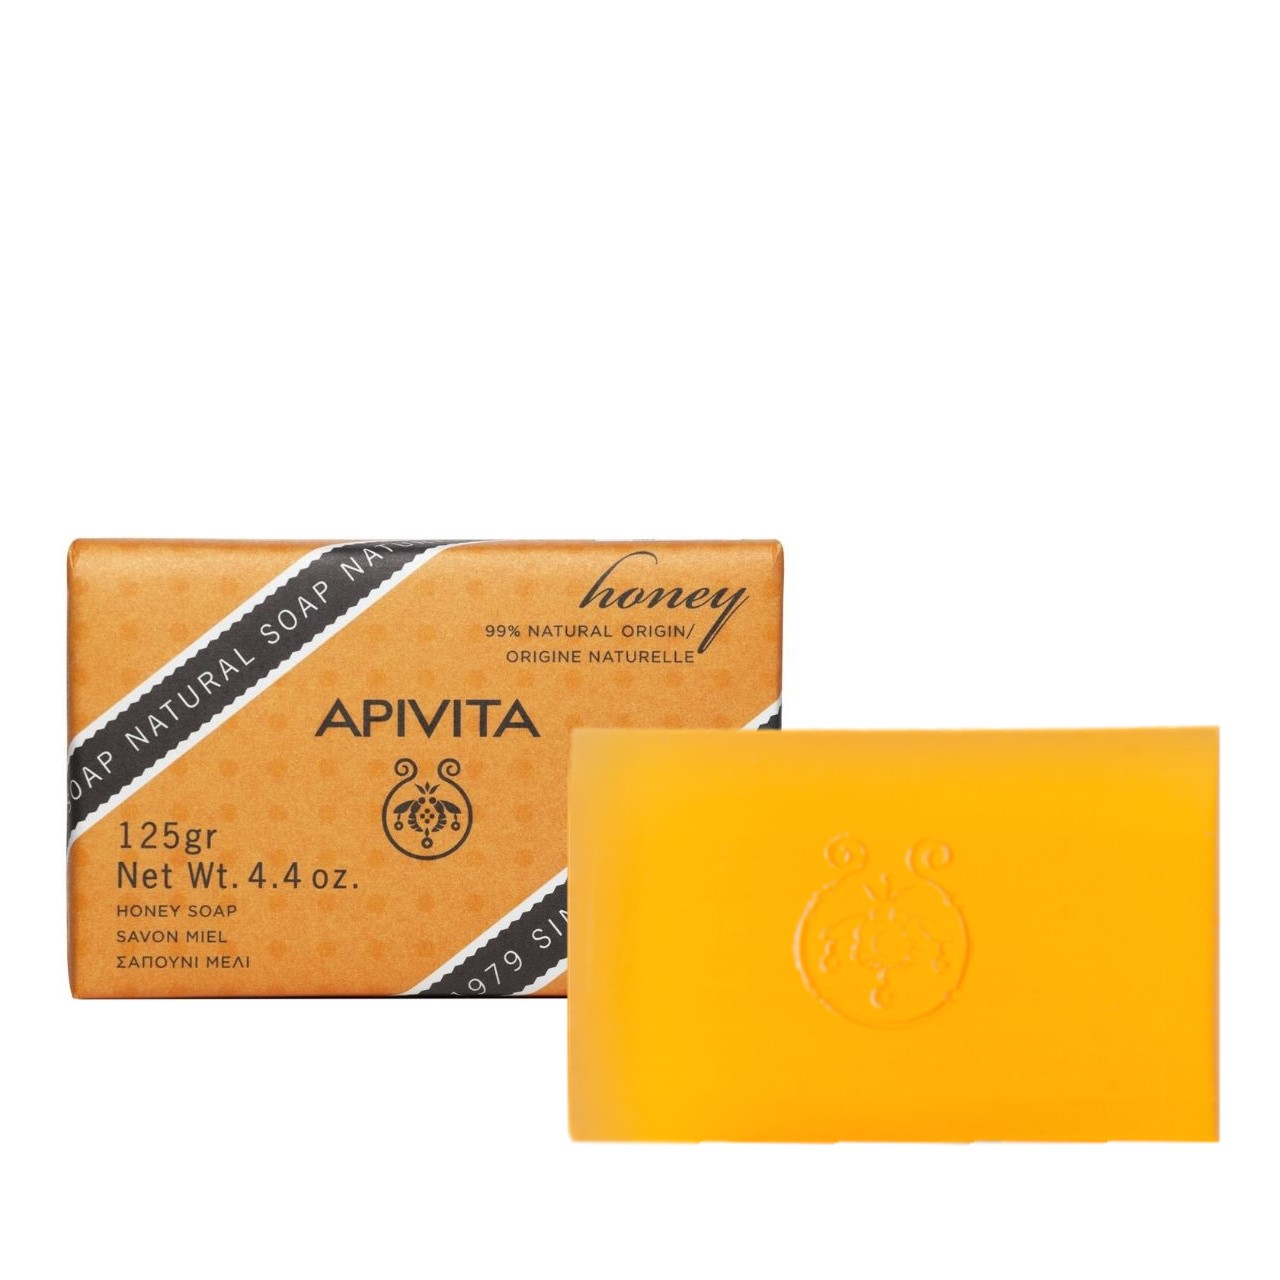 APIVITA Natural Soap with Honey 125g (4.41oz)